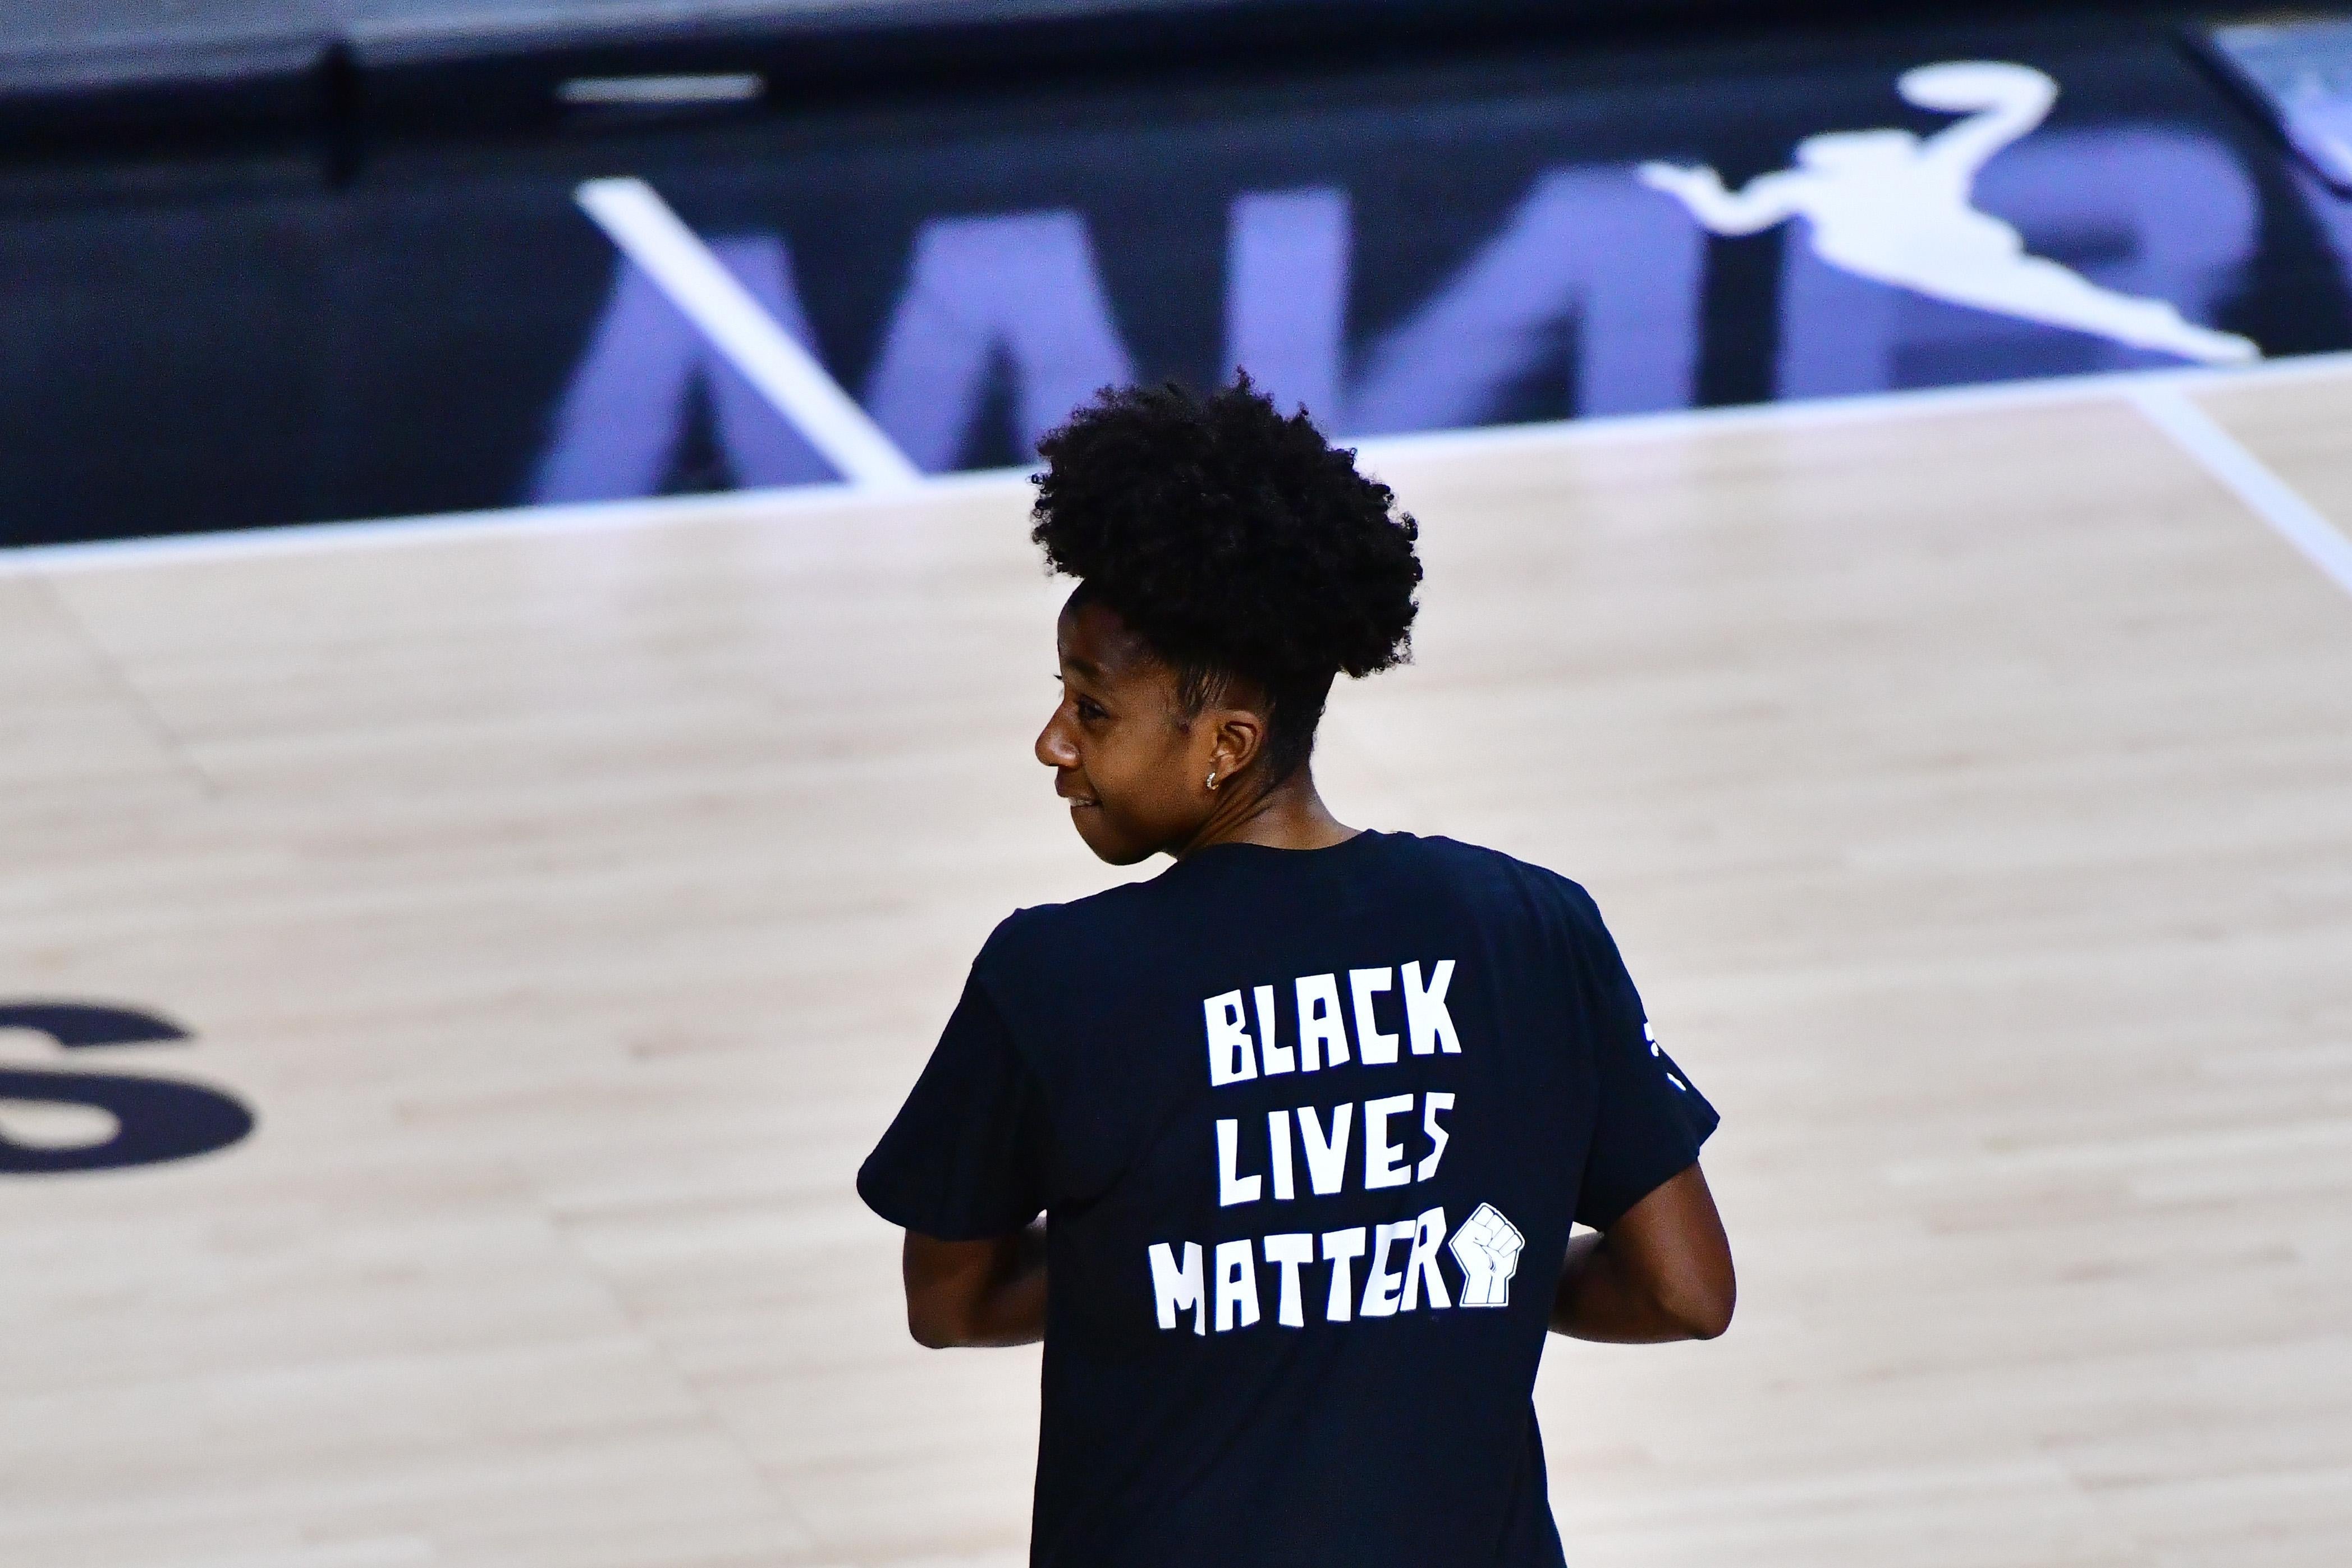 Shenise Johnson is seen on a basketball court wearing a Black Lives Matter shirt.